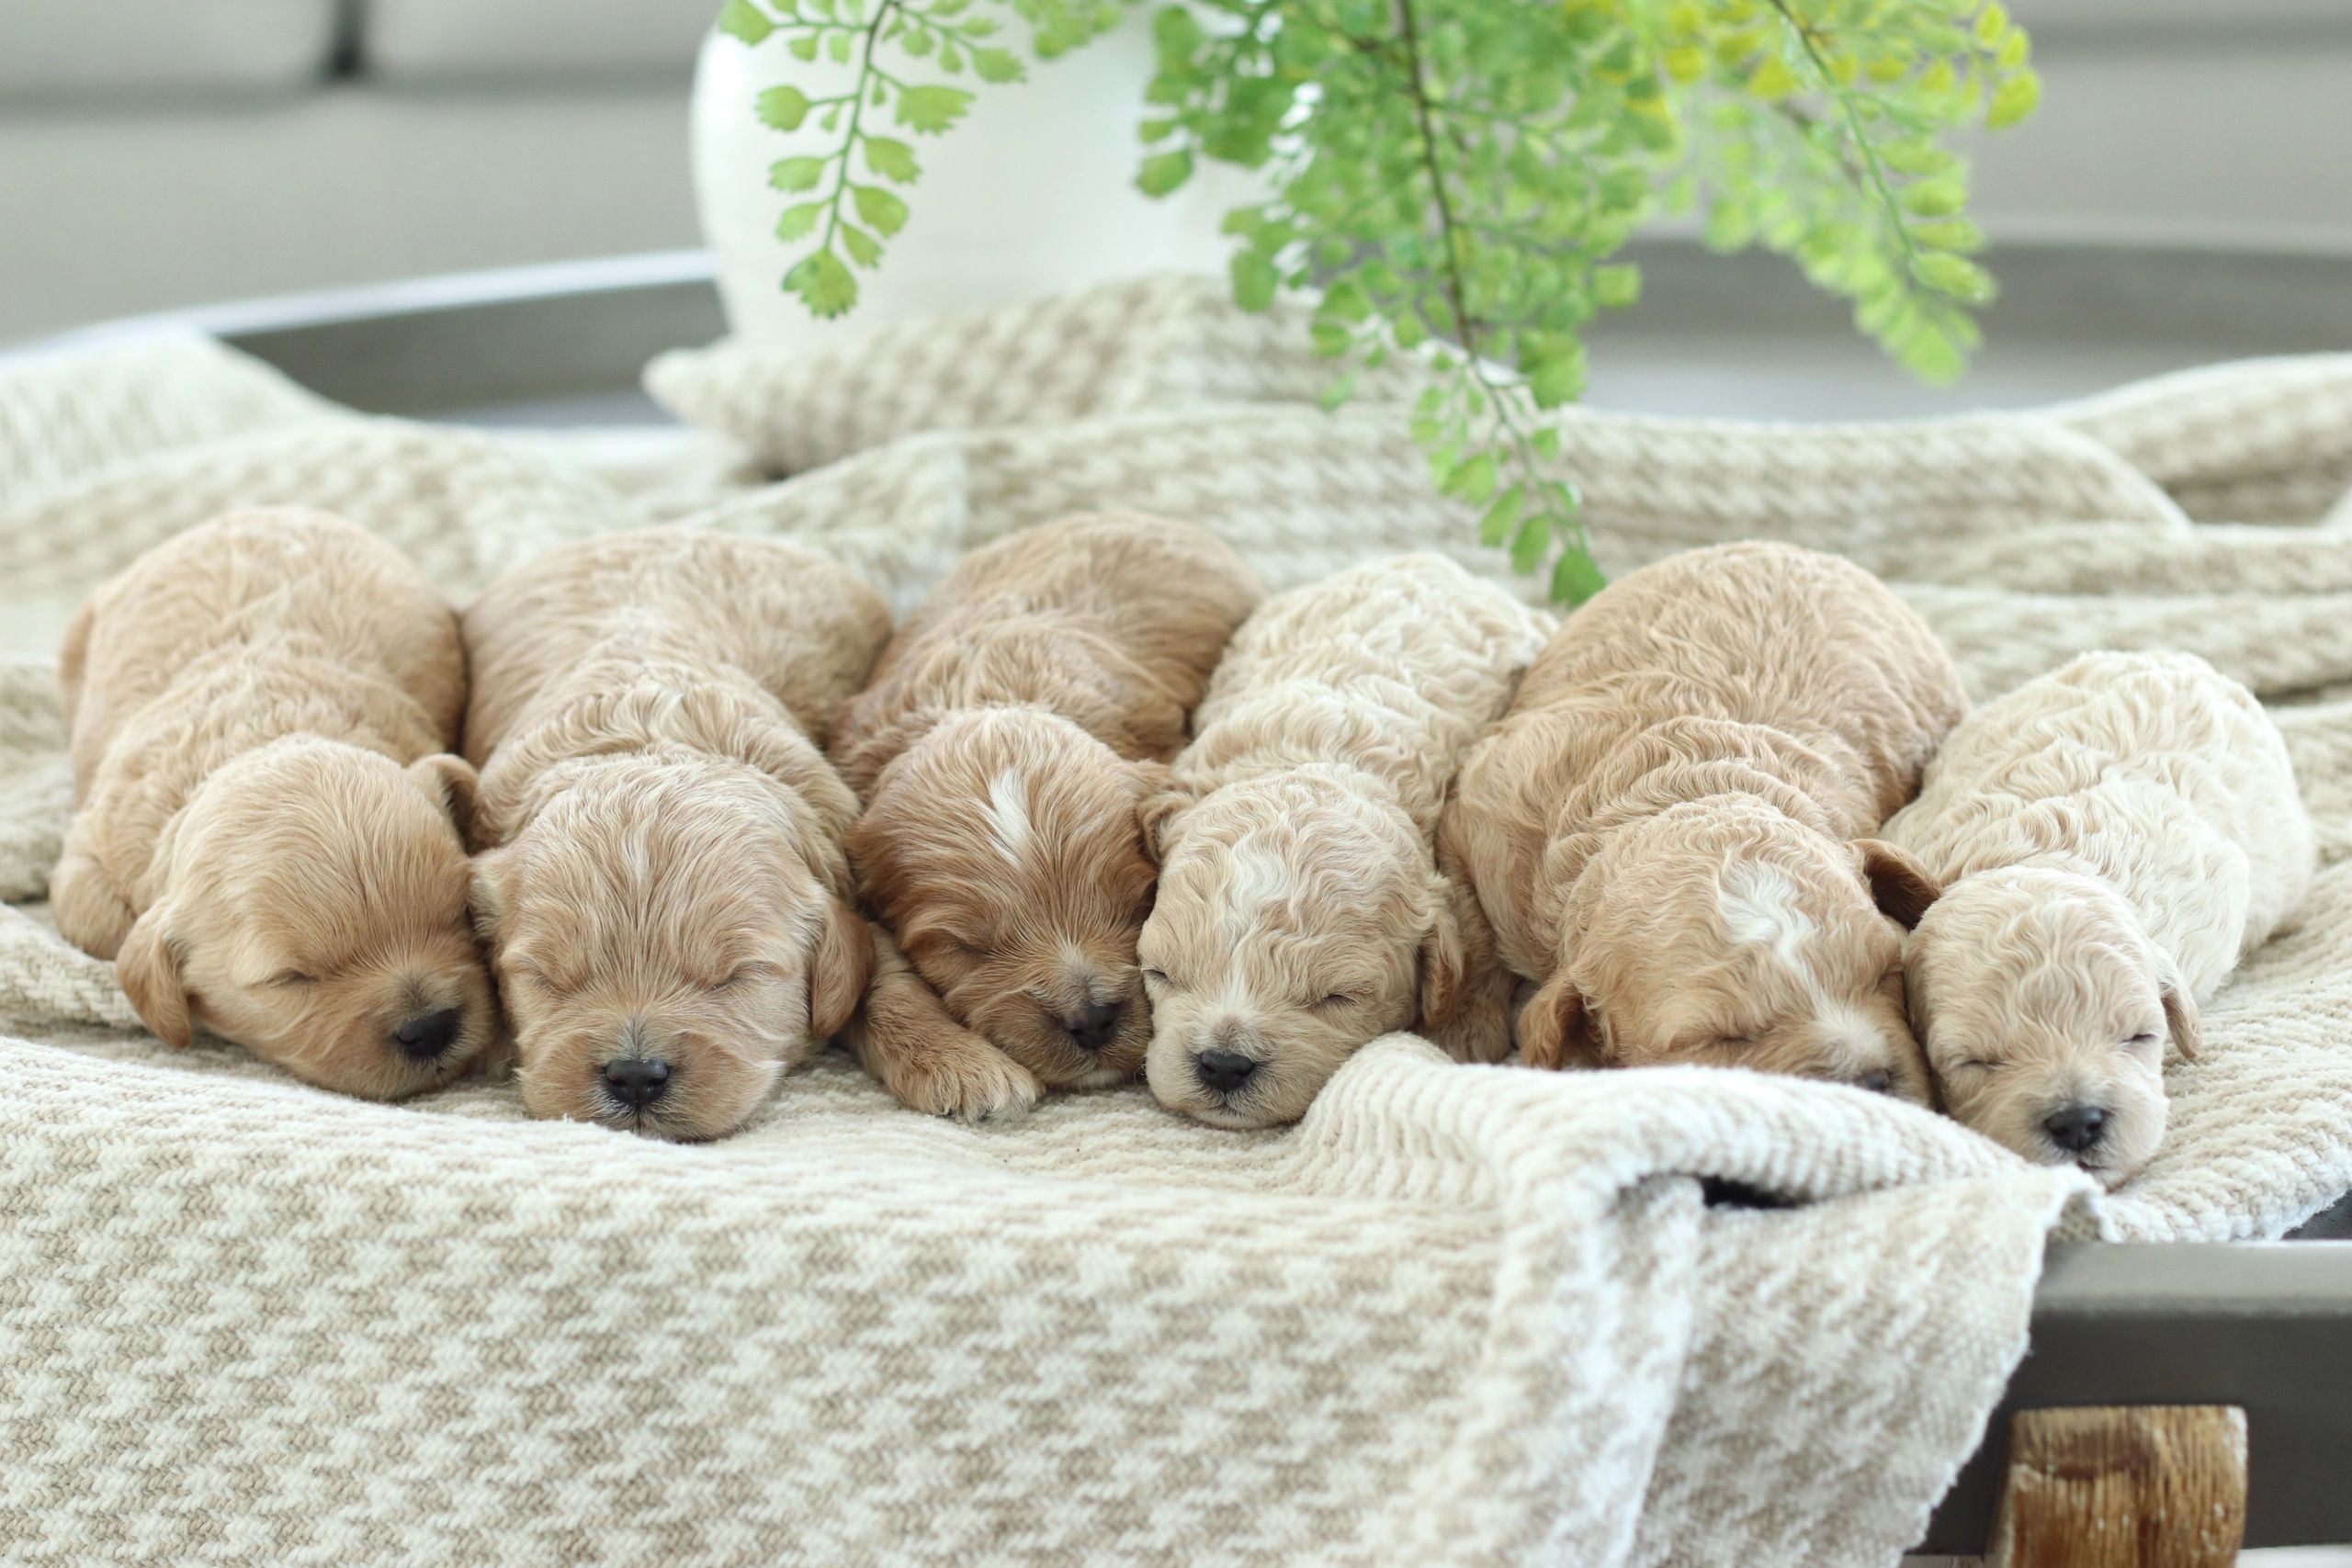 Cavapoochon Puppies for Sale, Poodle mix Puppies for Sale, doodle puppies for sale, Cavalier Puppies